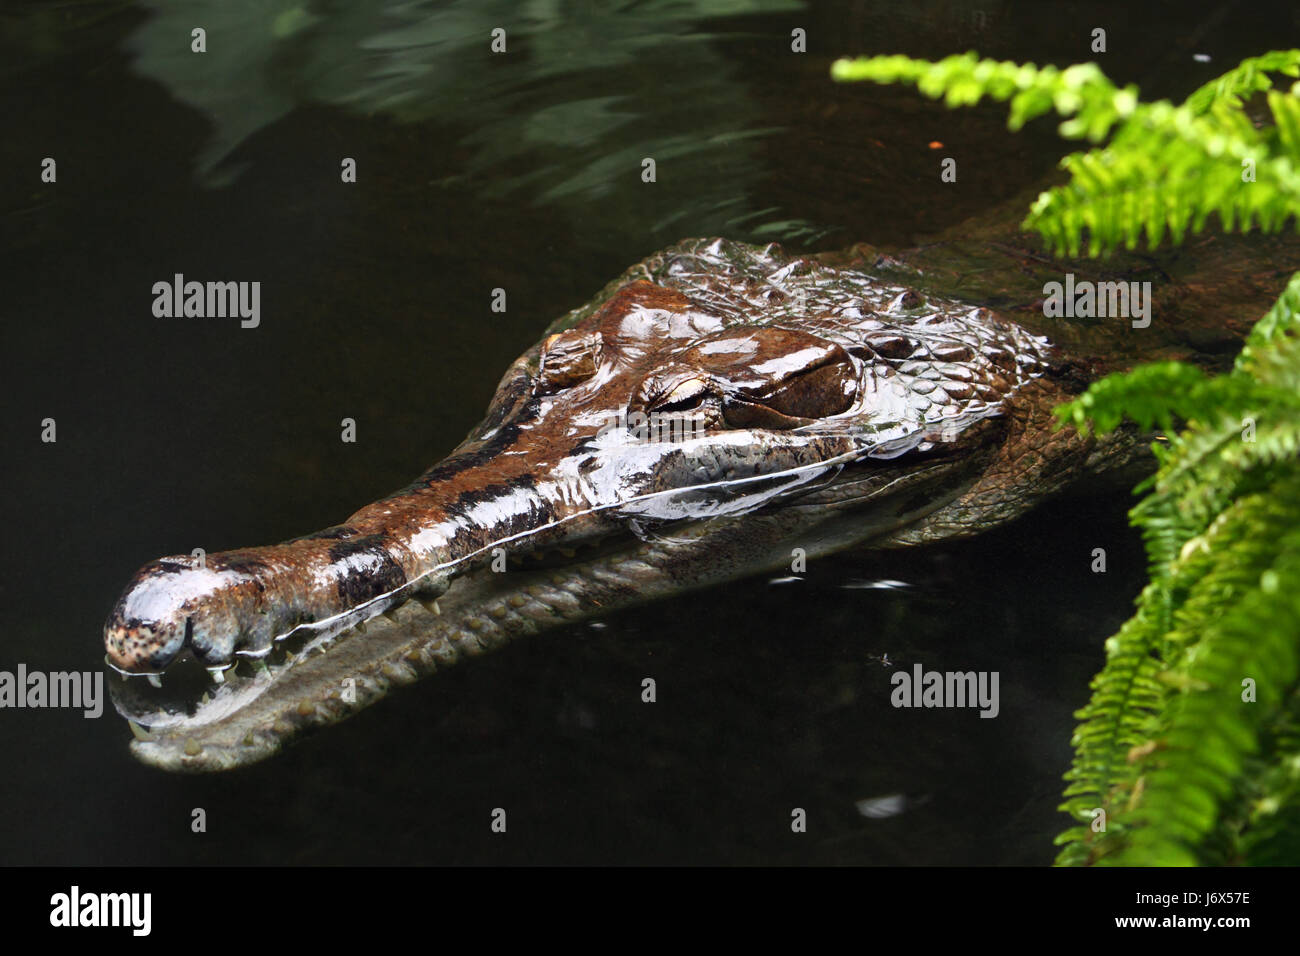 Fauna Krokodil Zoo Raubtier Wasser Gefahr große große enorme extrem leistungsfähige Stockfoto